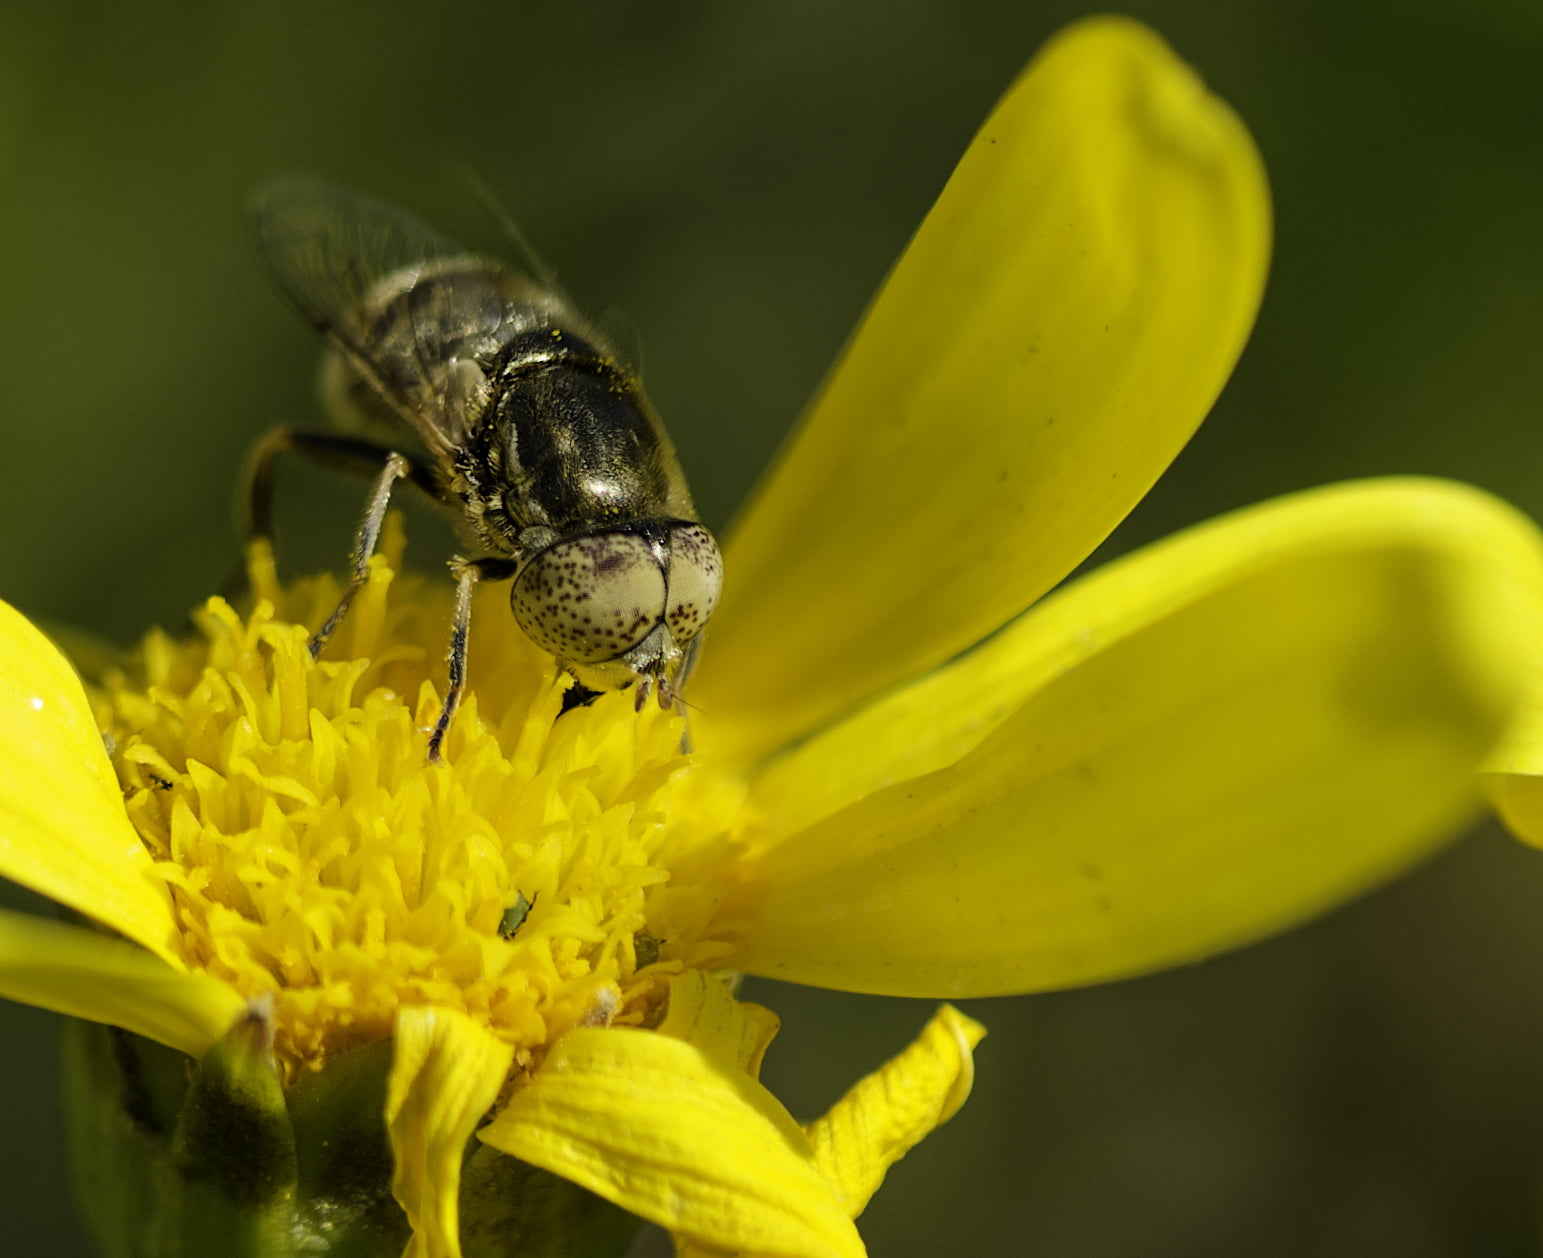 bumblebee of a yellow flower pollen, mosca, las flores